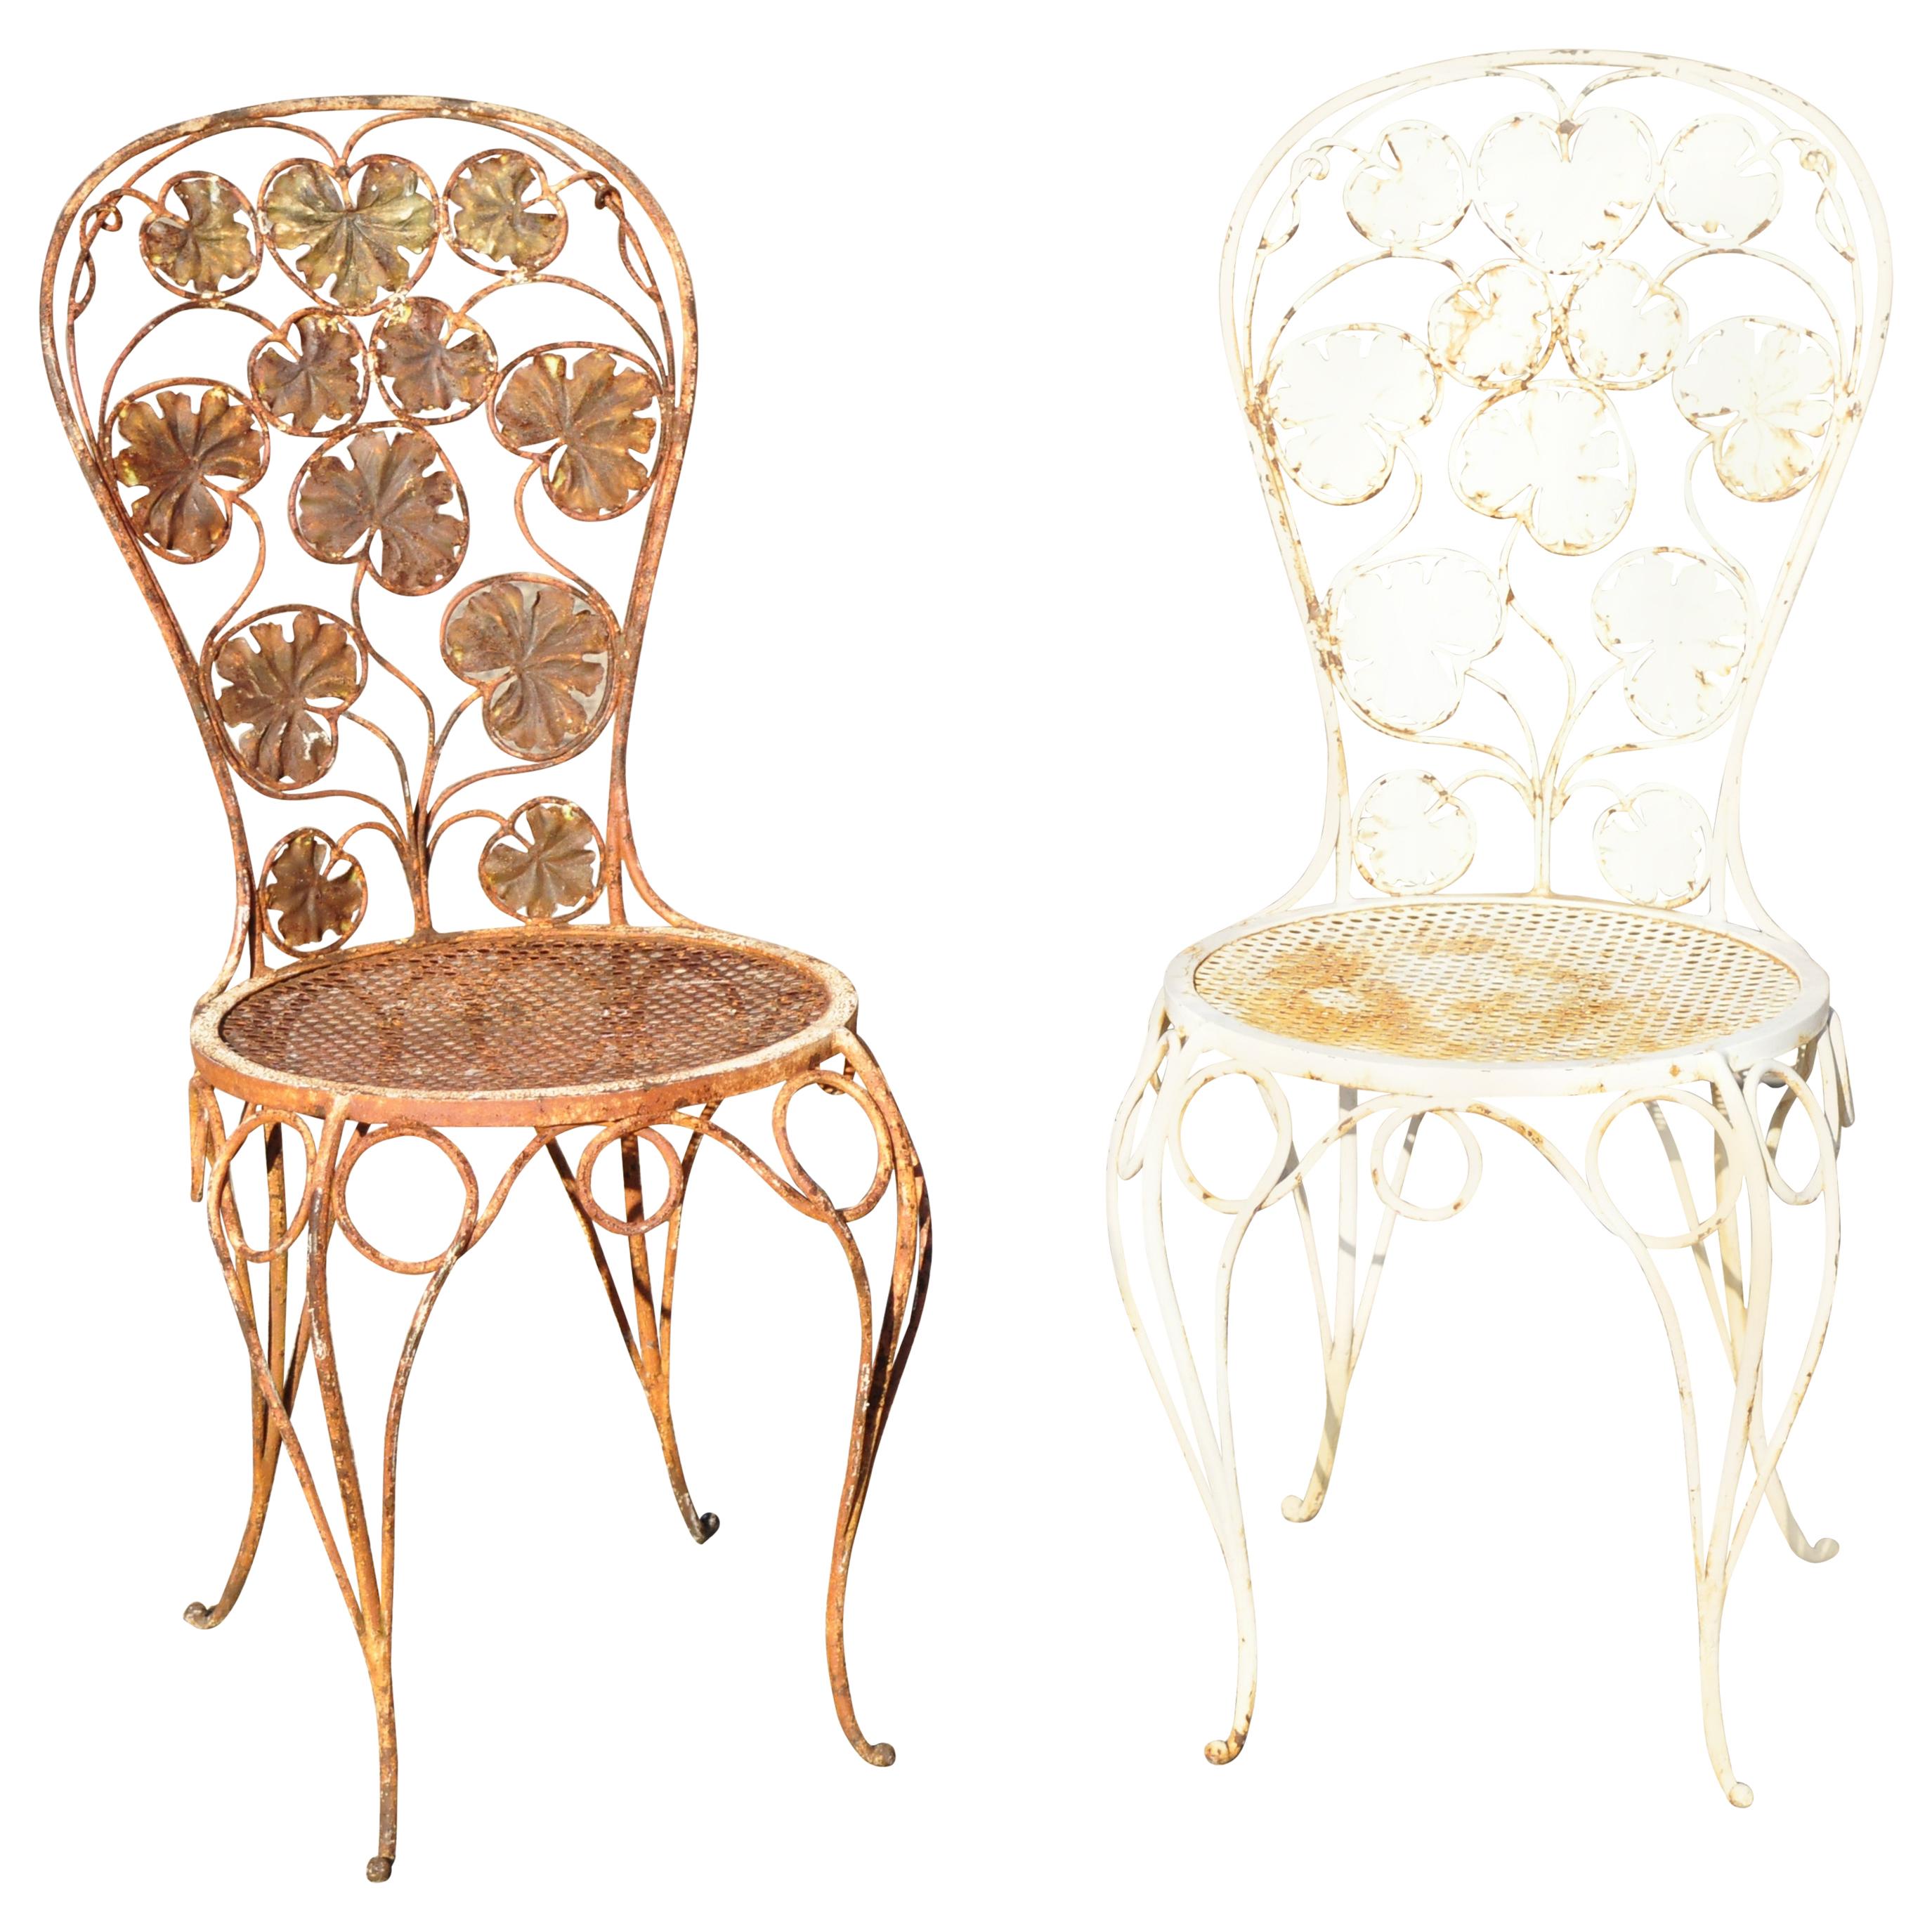 Antique French Art Nouveau Flower Maple Leaf Wrought Iron Garden Chairs, a Pair